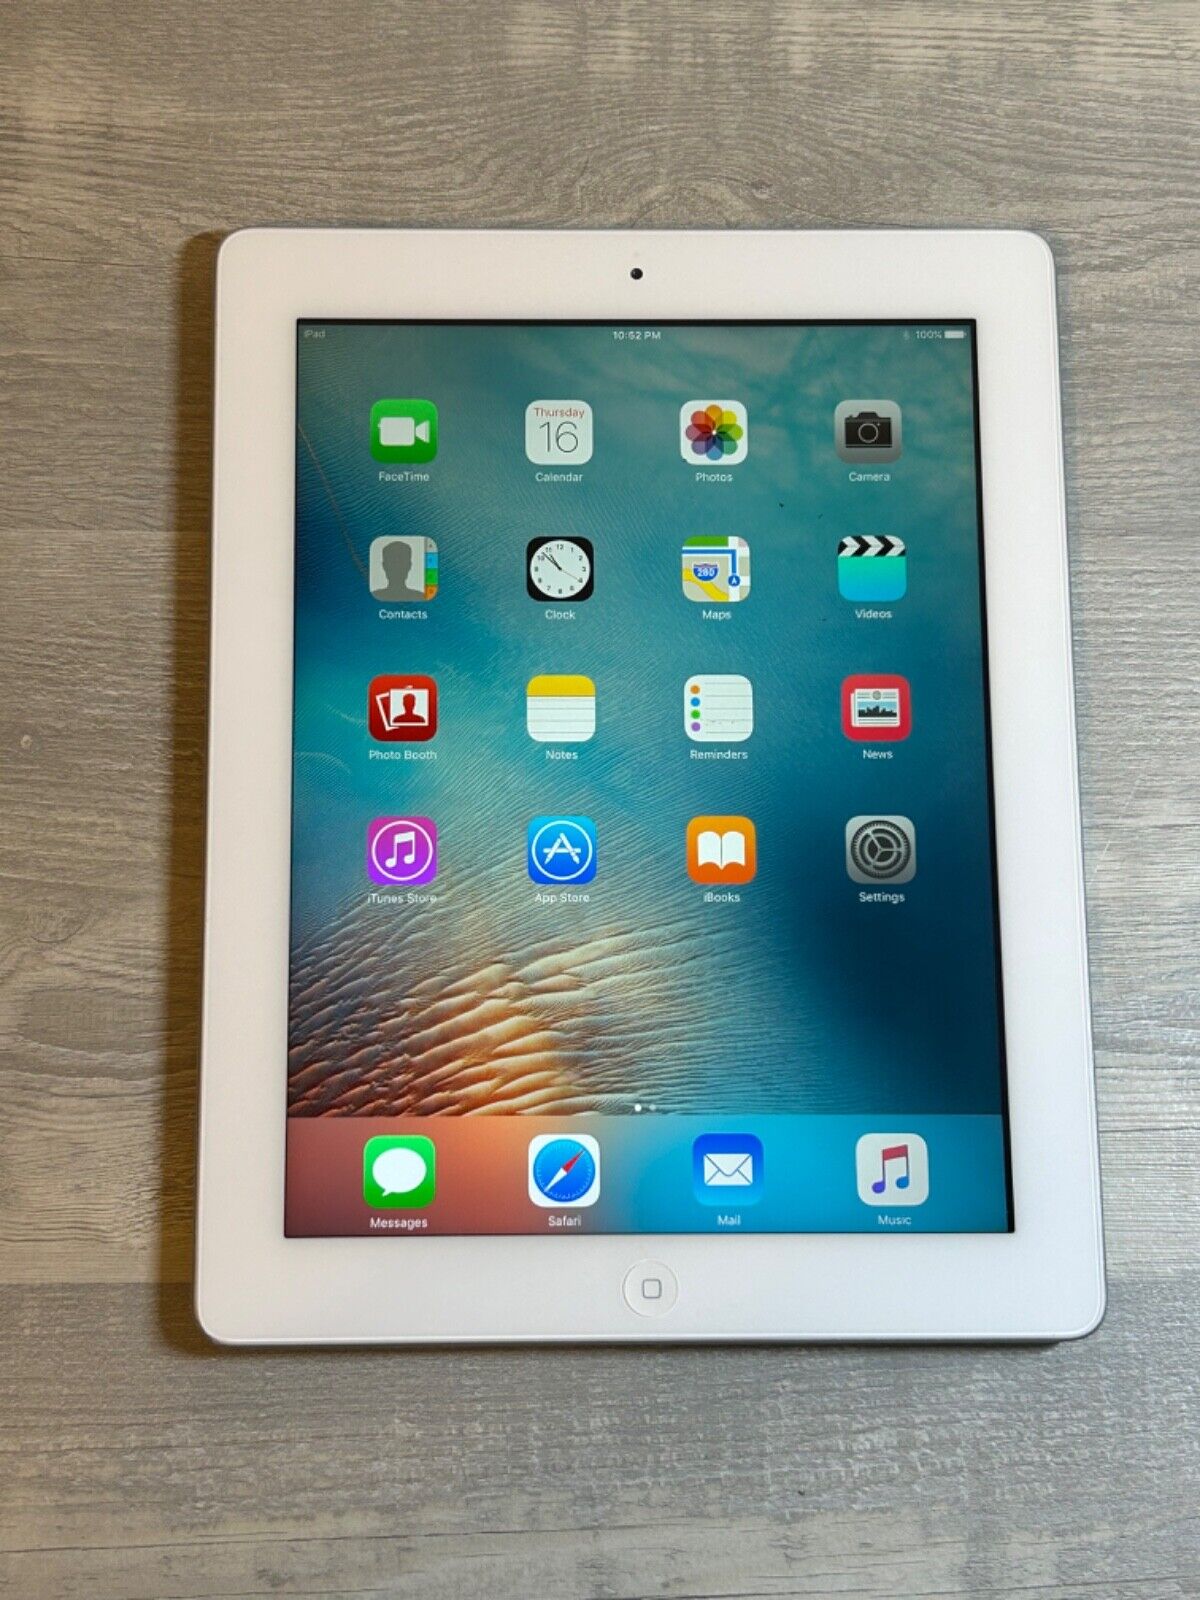 Apple iPad 2nd Generation 16GB WiFi Tablet - White & Black